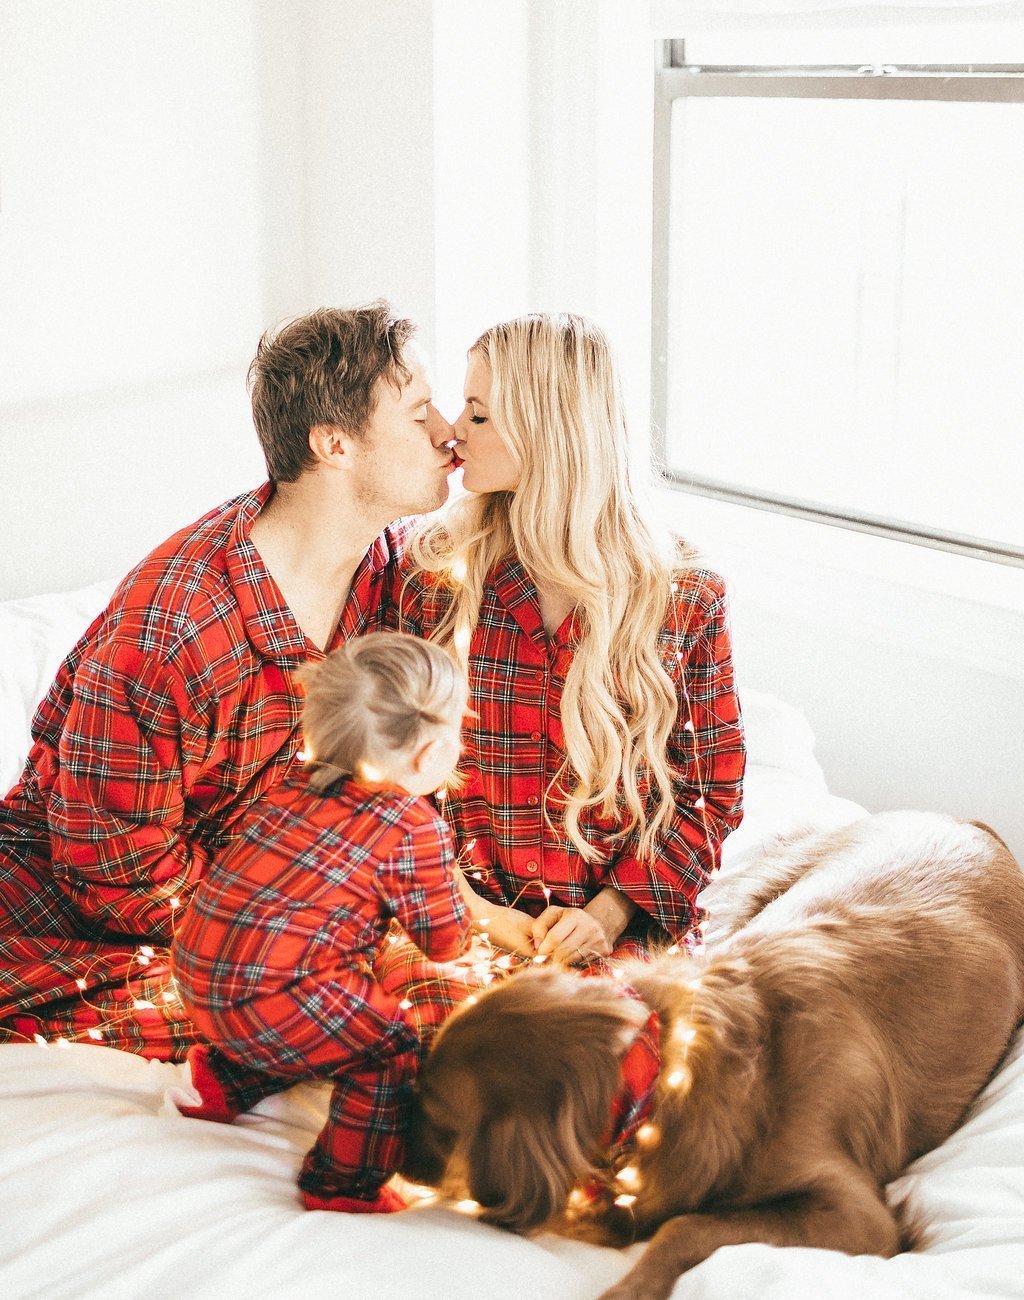 Holiday Family Matching Pajamas Red Checked